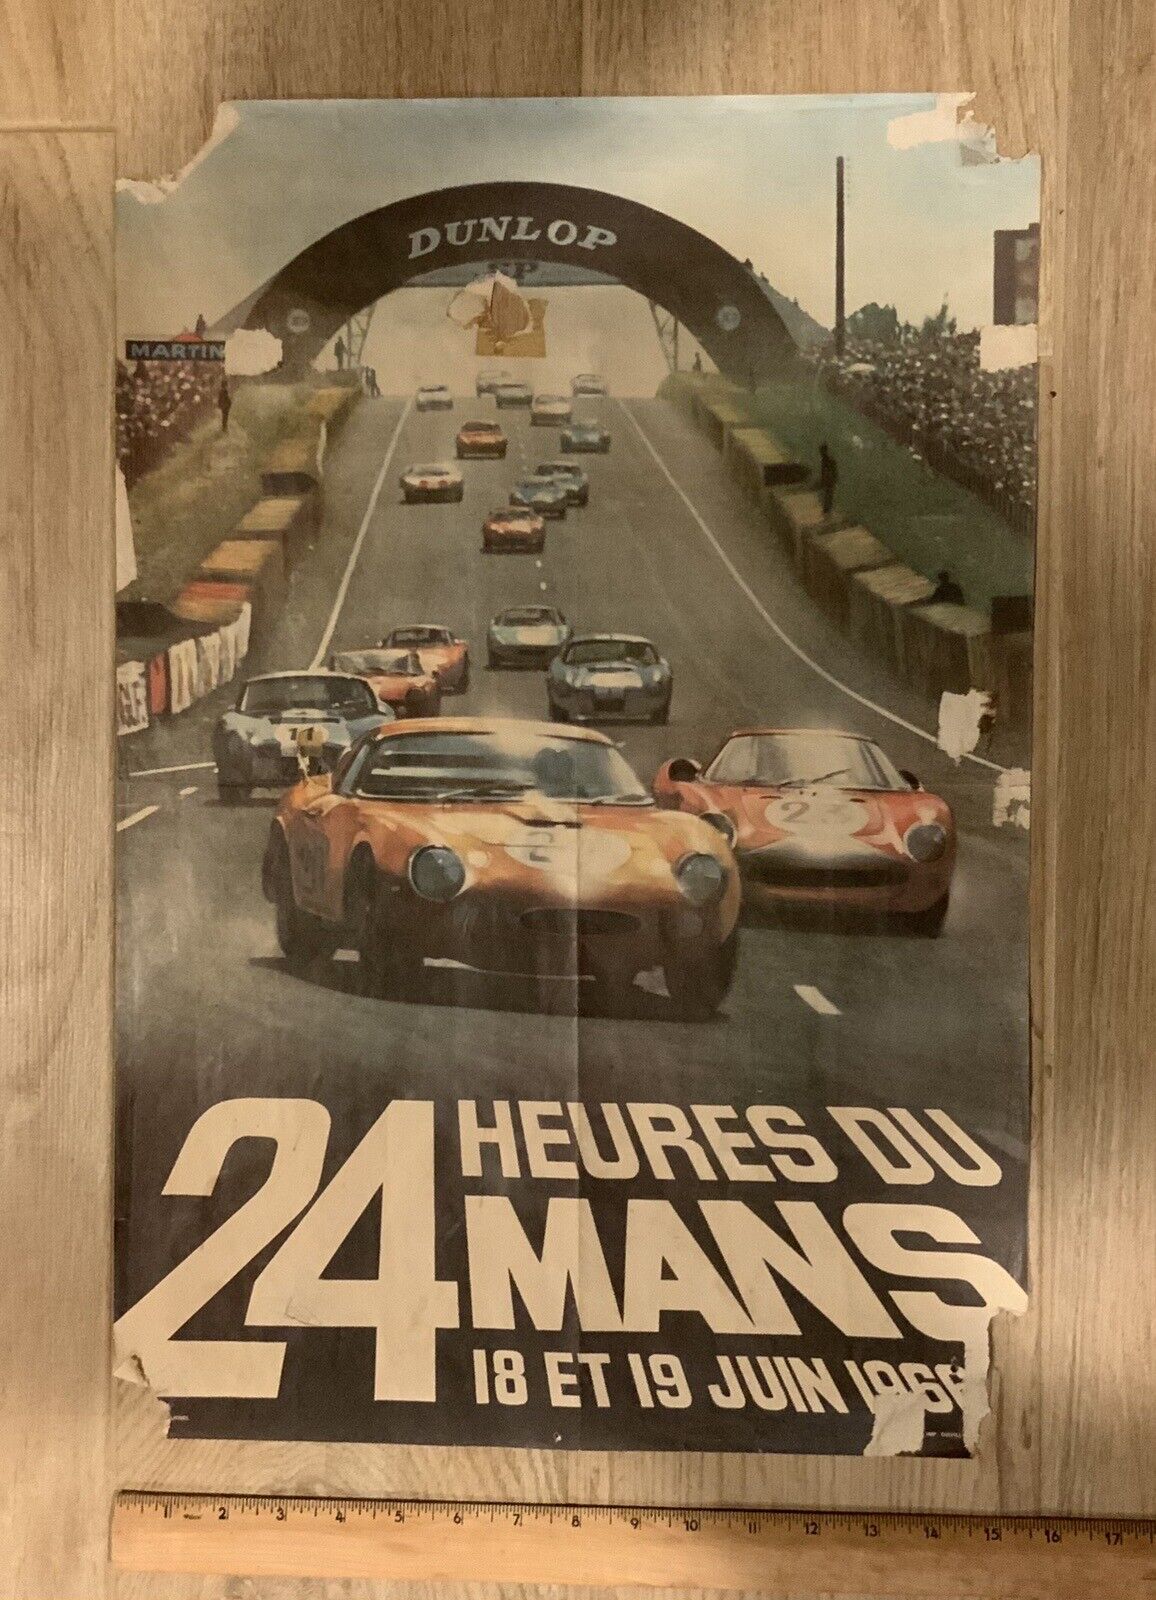 1966 LeMans Racing Poster | Original | 24 Heures Du Mans | Really Rough